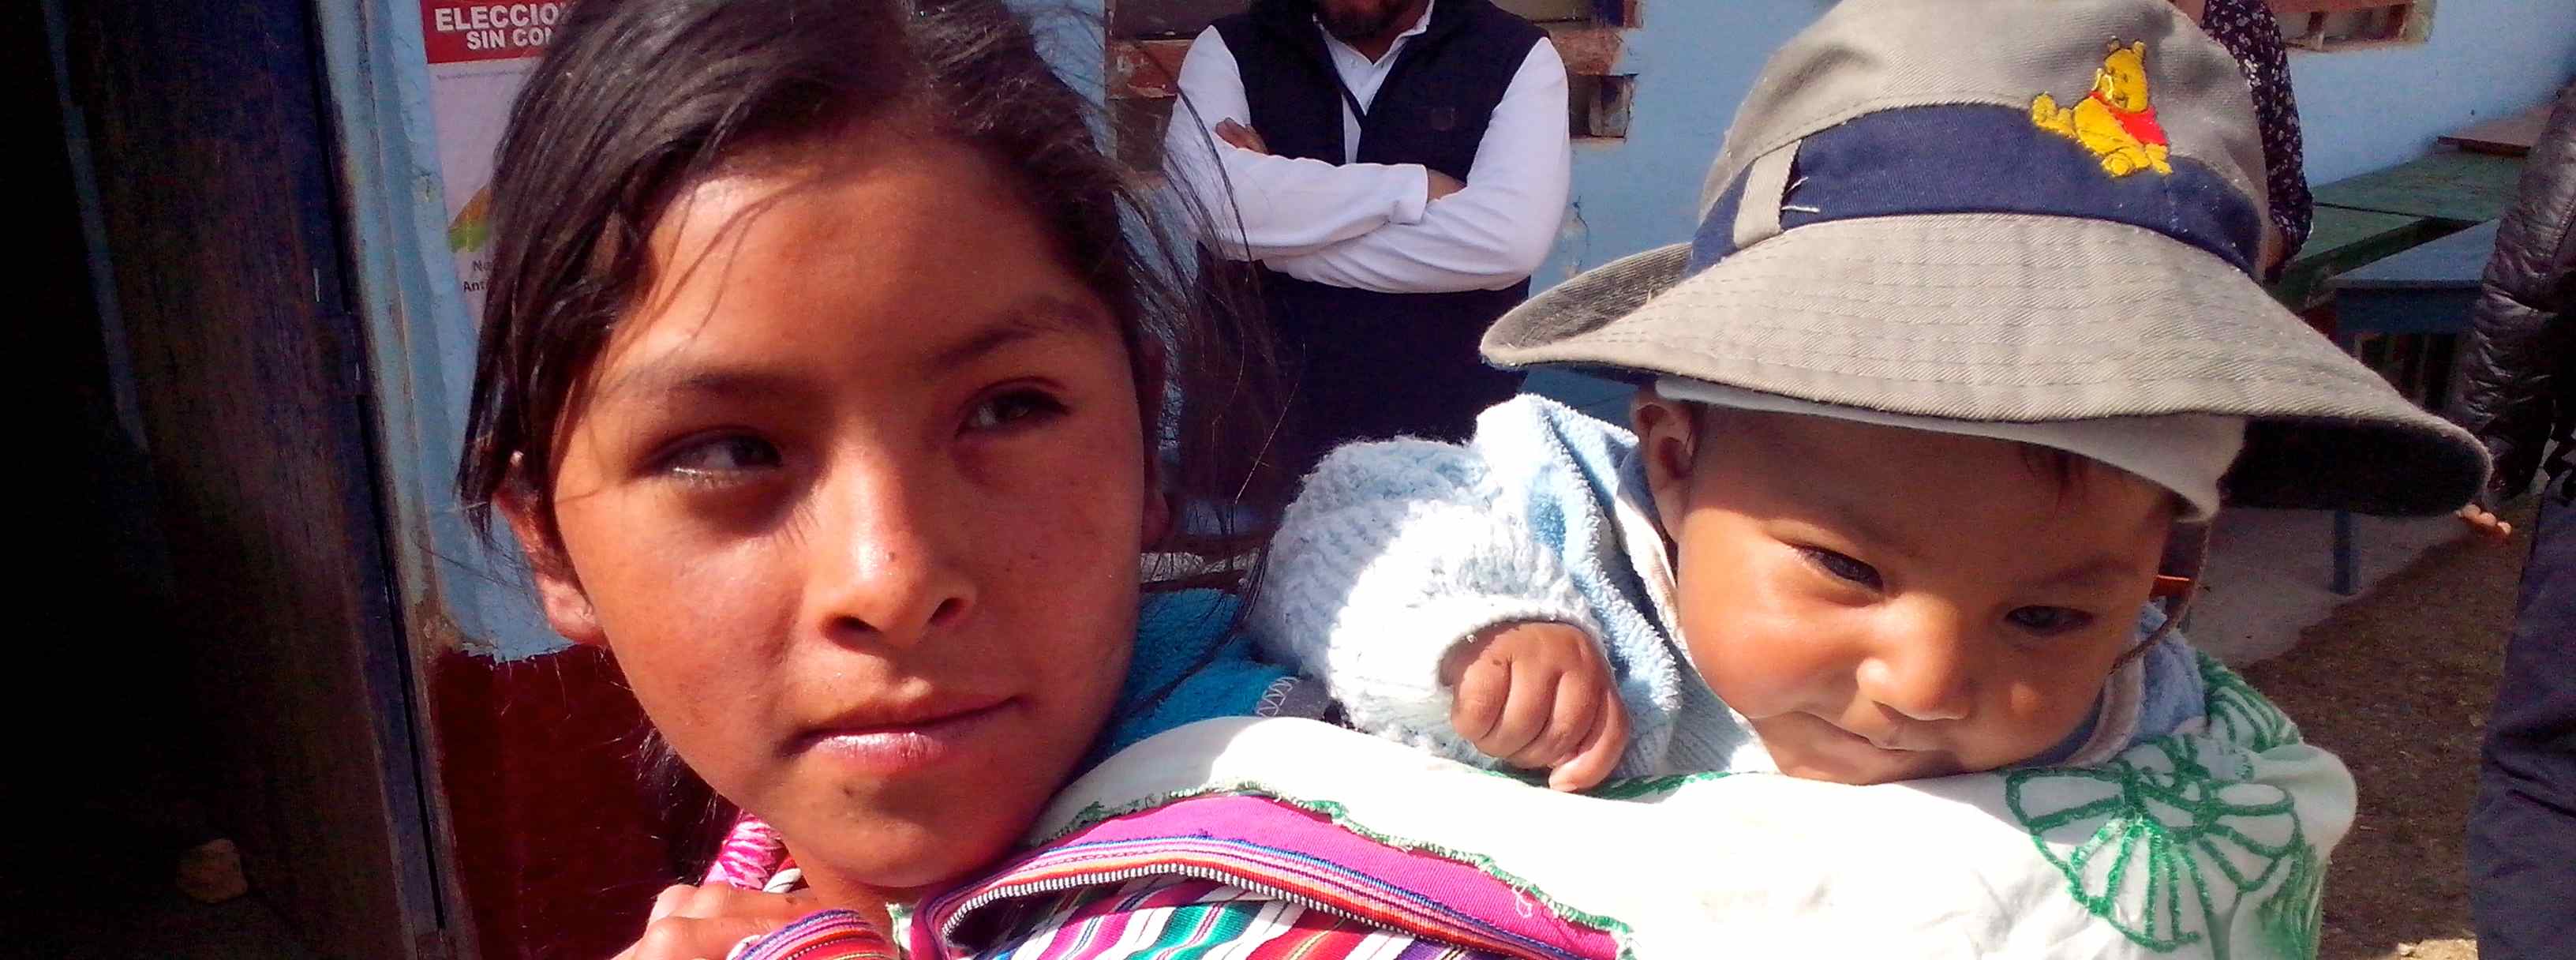 The Surprising Peruvian People